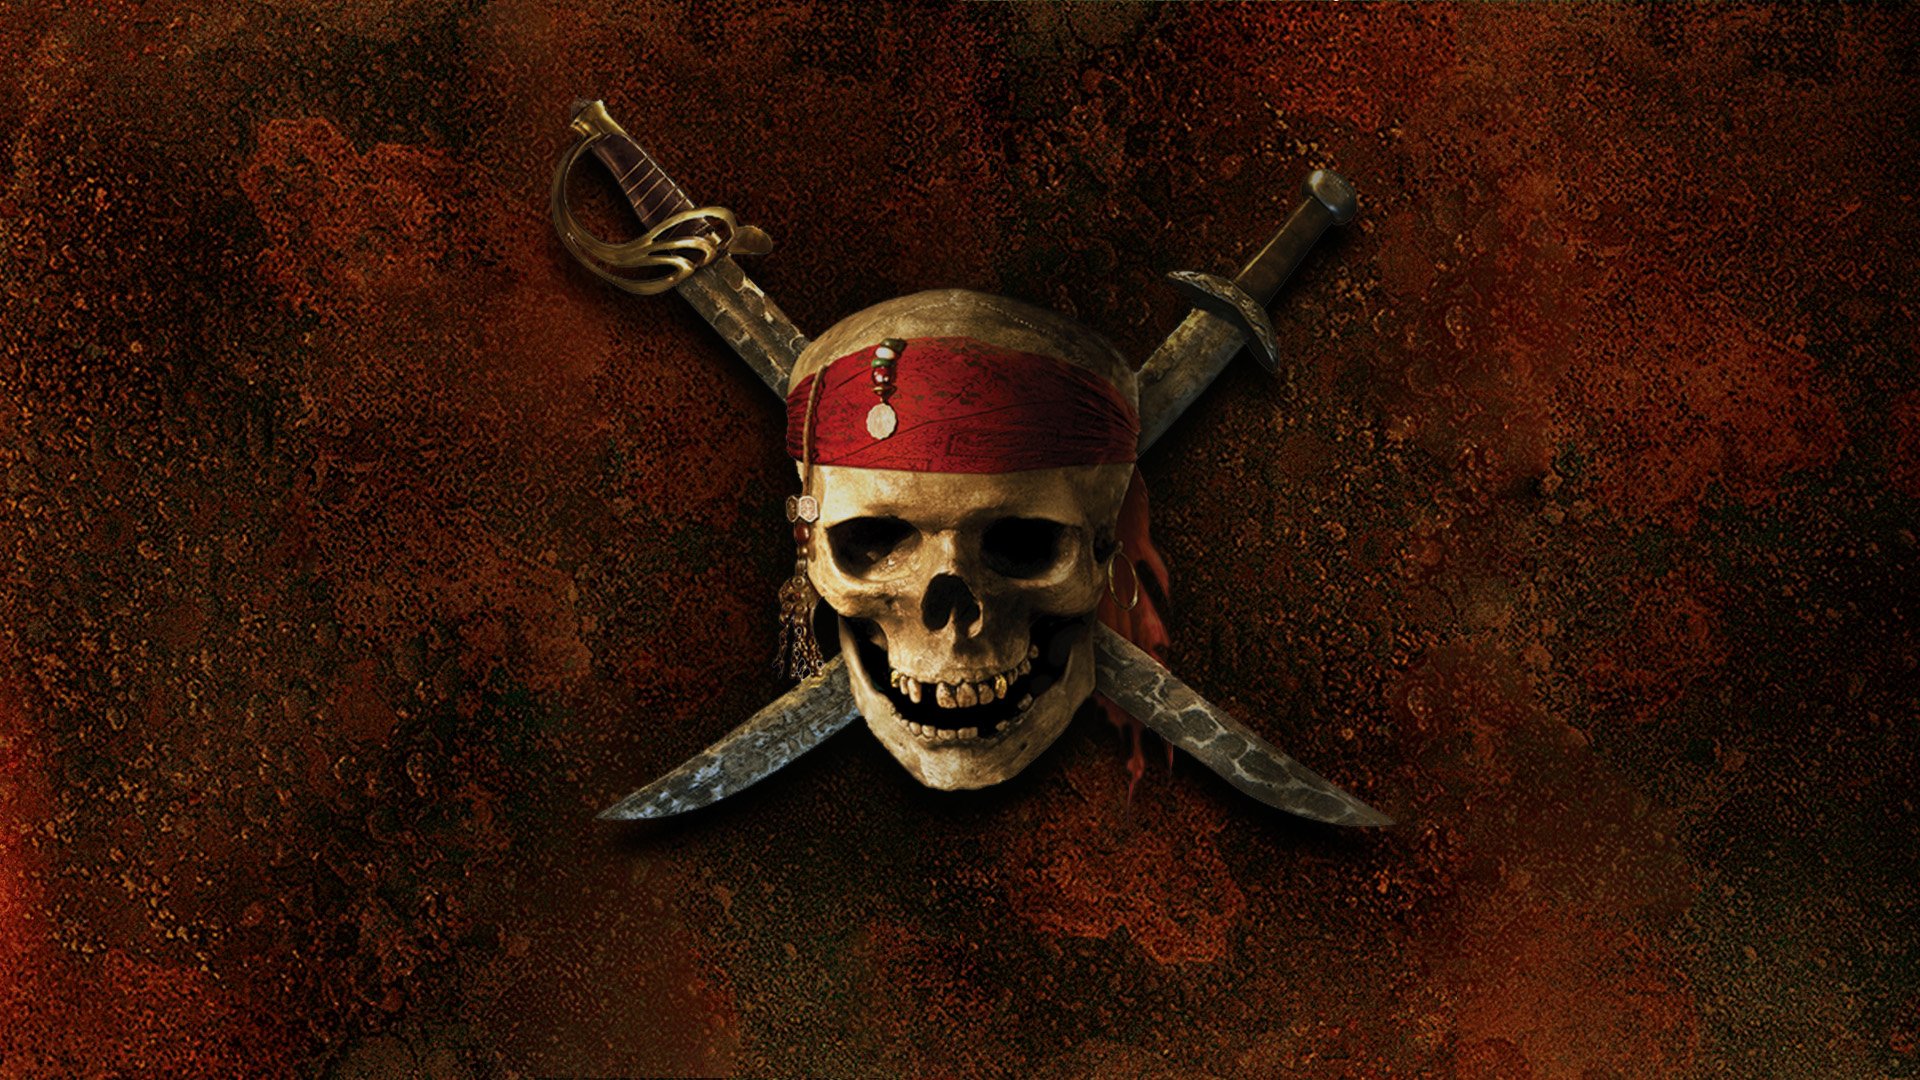 Pirates of the caribbean pc deutsch patch